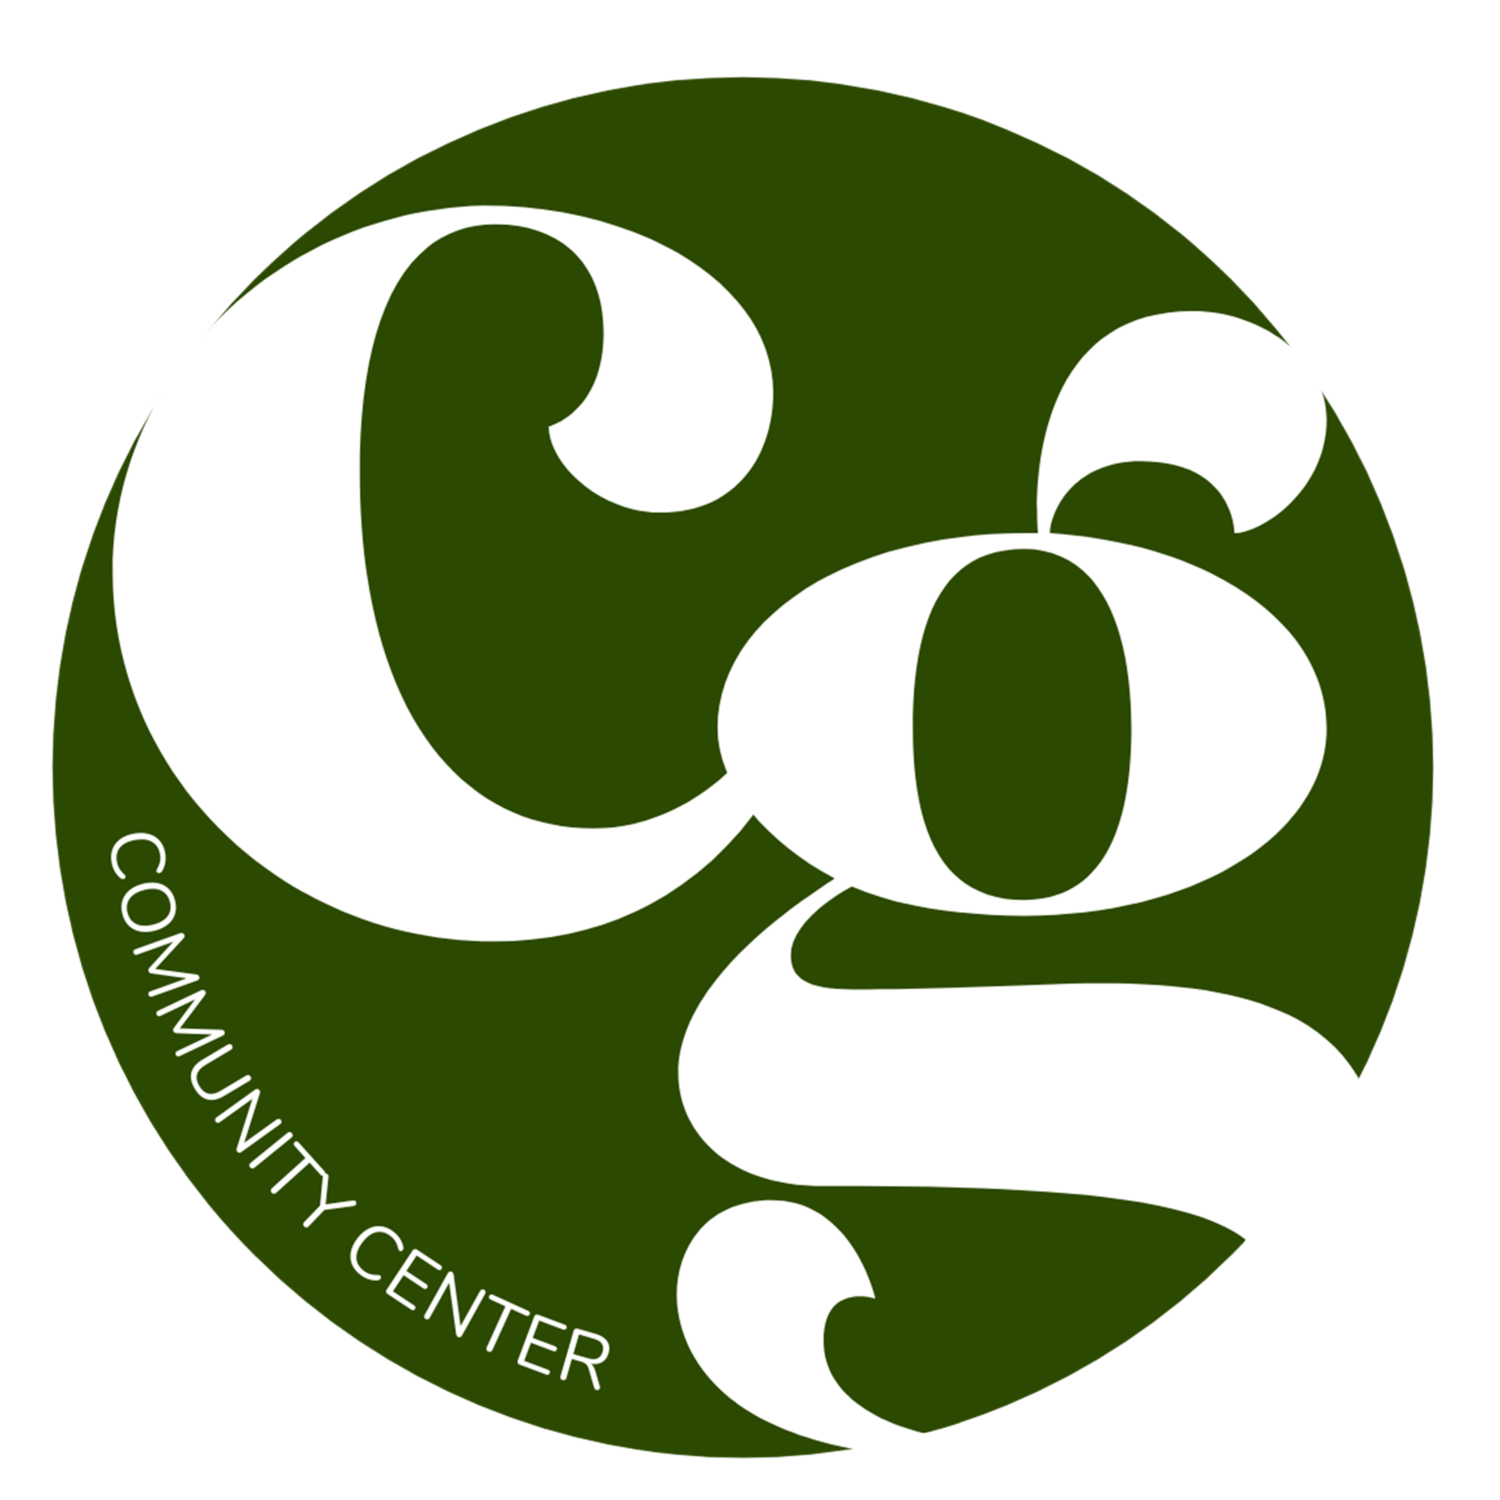 Cory Glenville Community Center